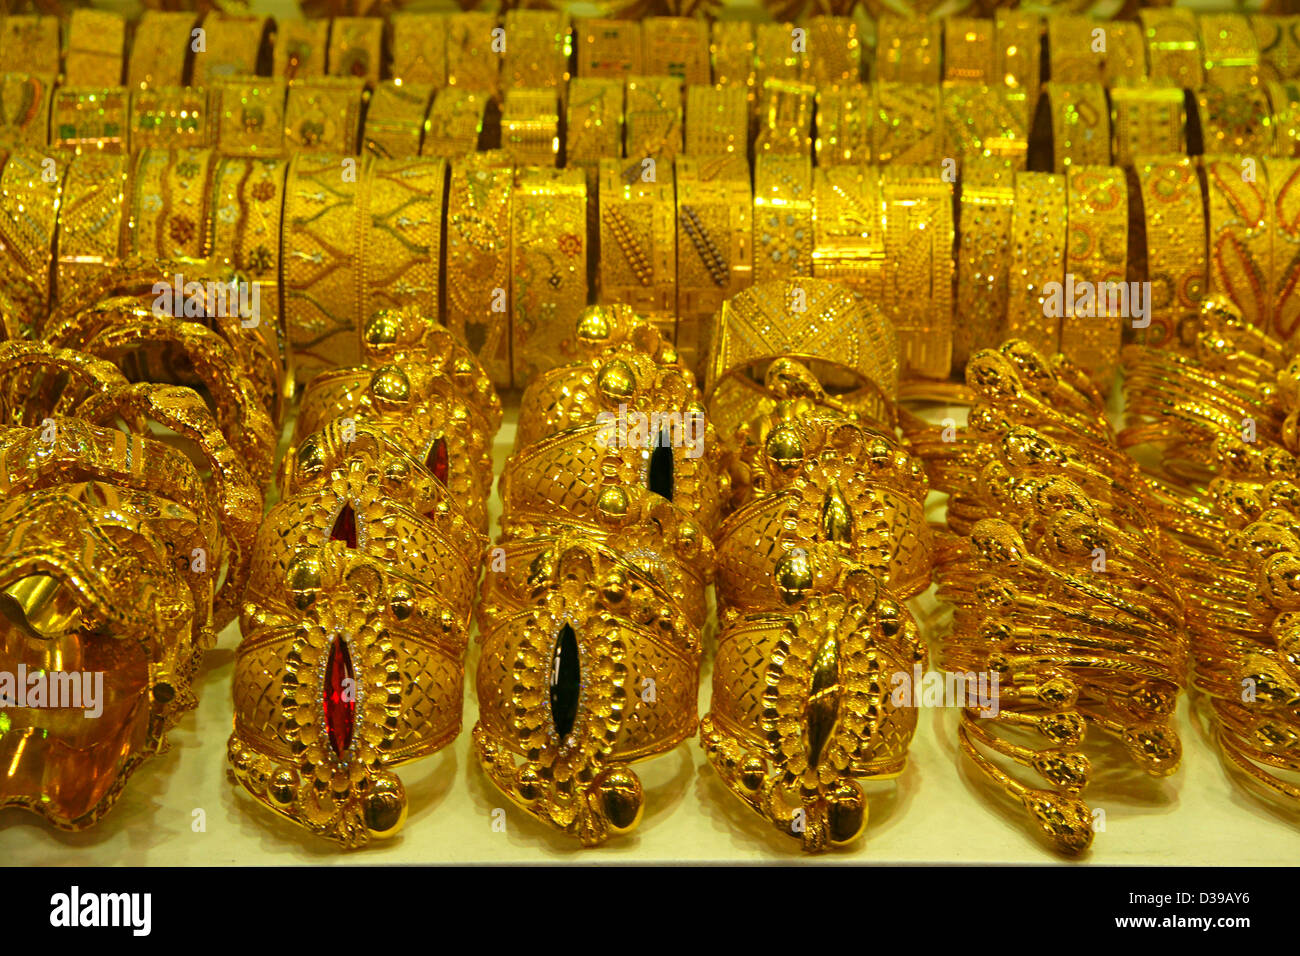 UAE Emirate of Dubai Gold souq at Deira Stock Photo - Alamy